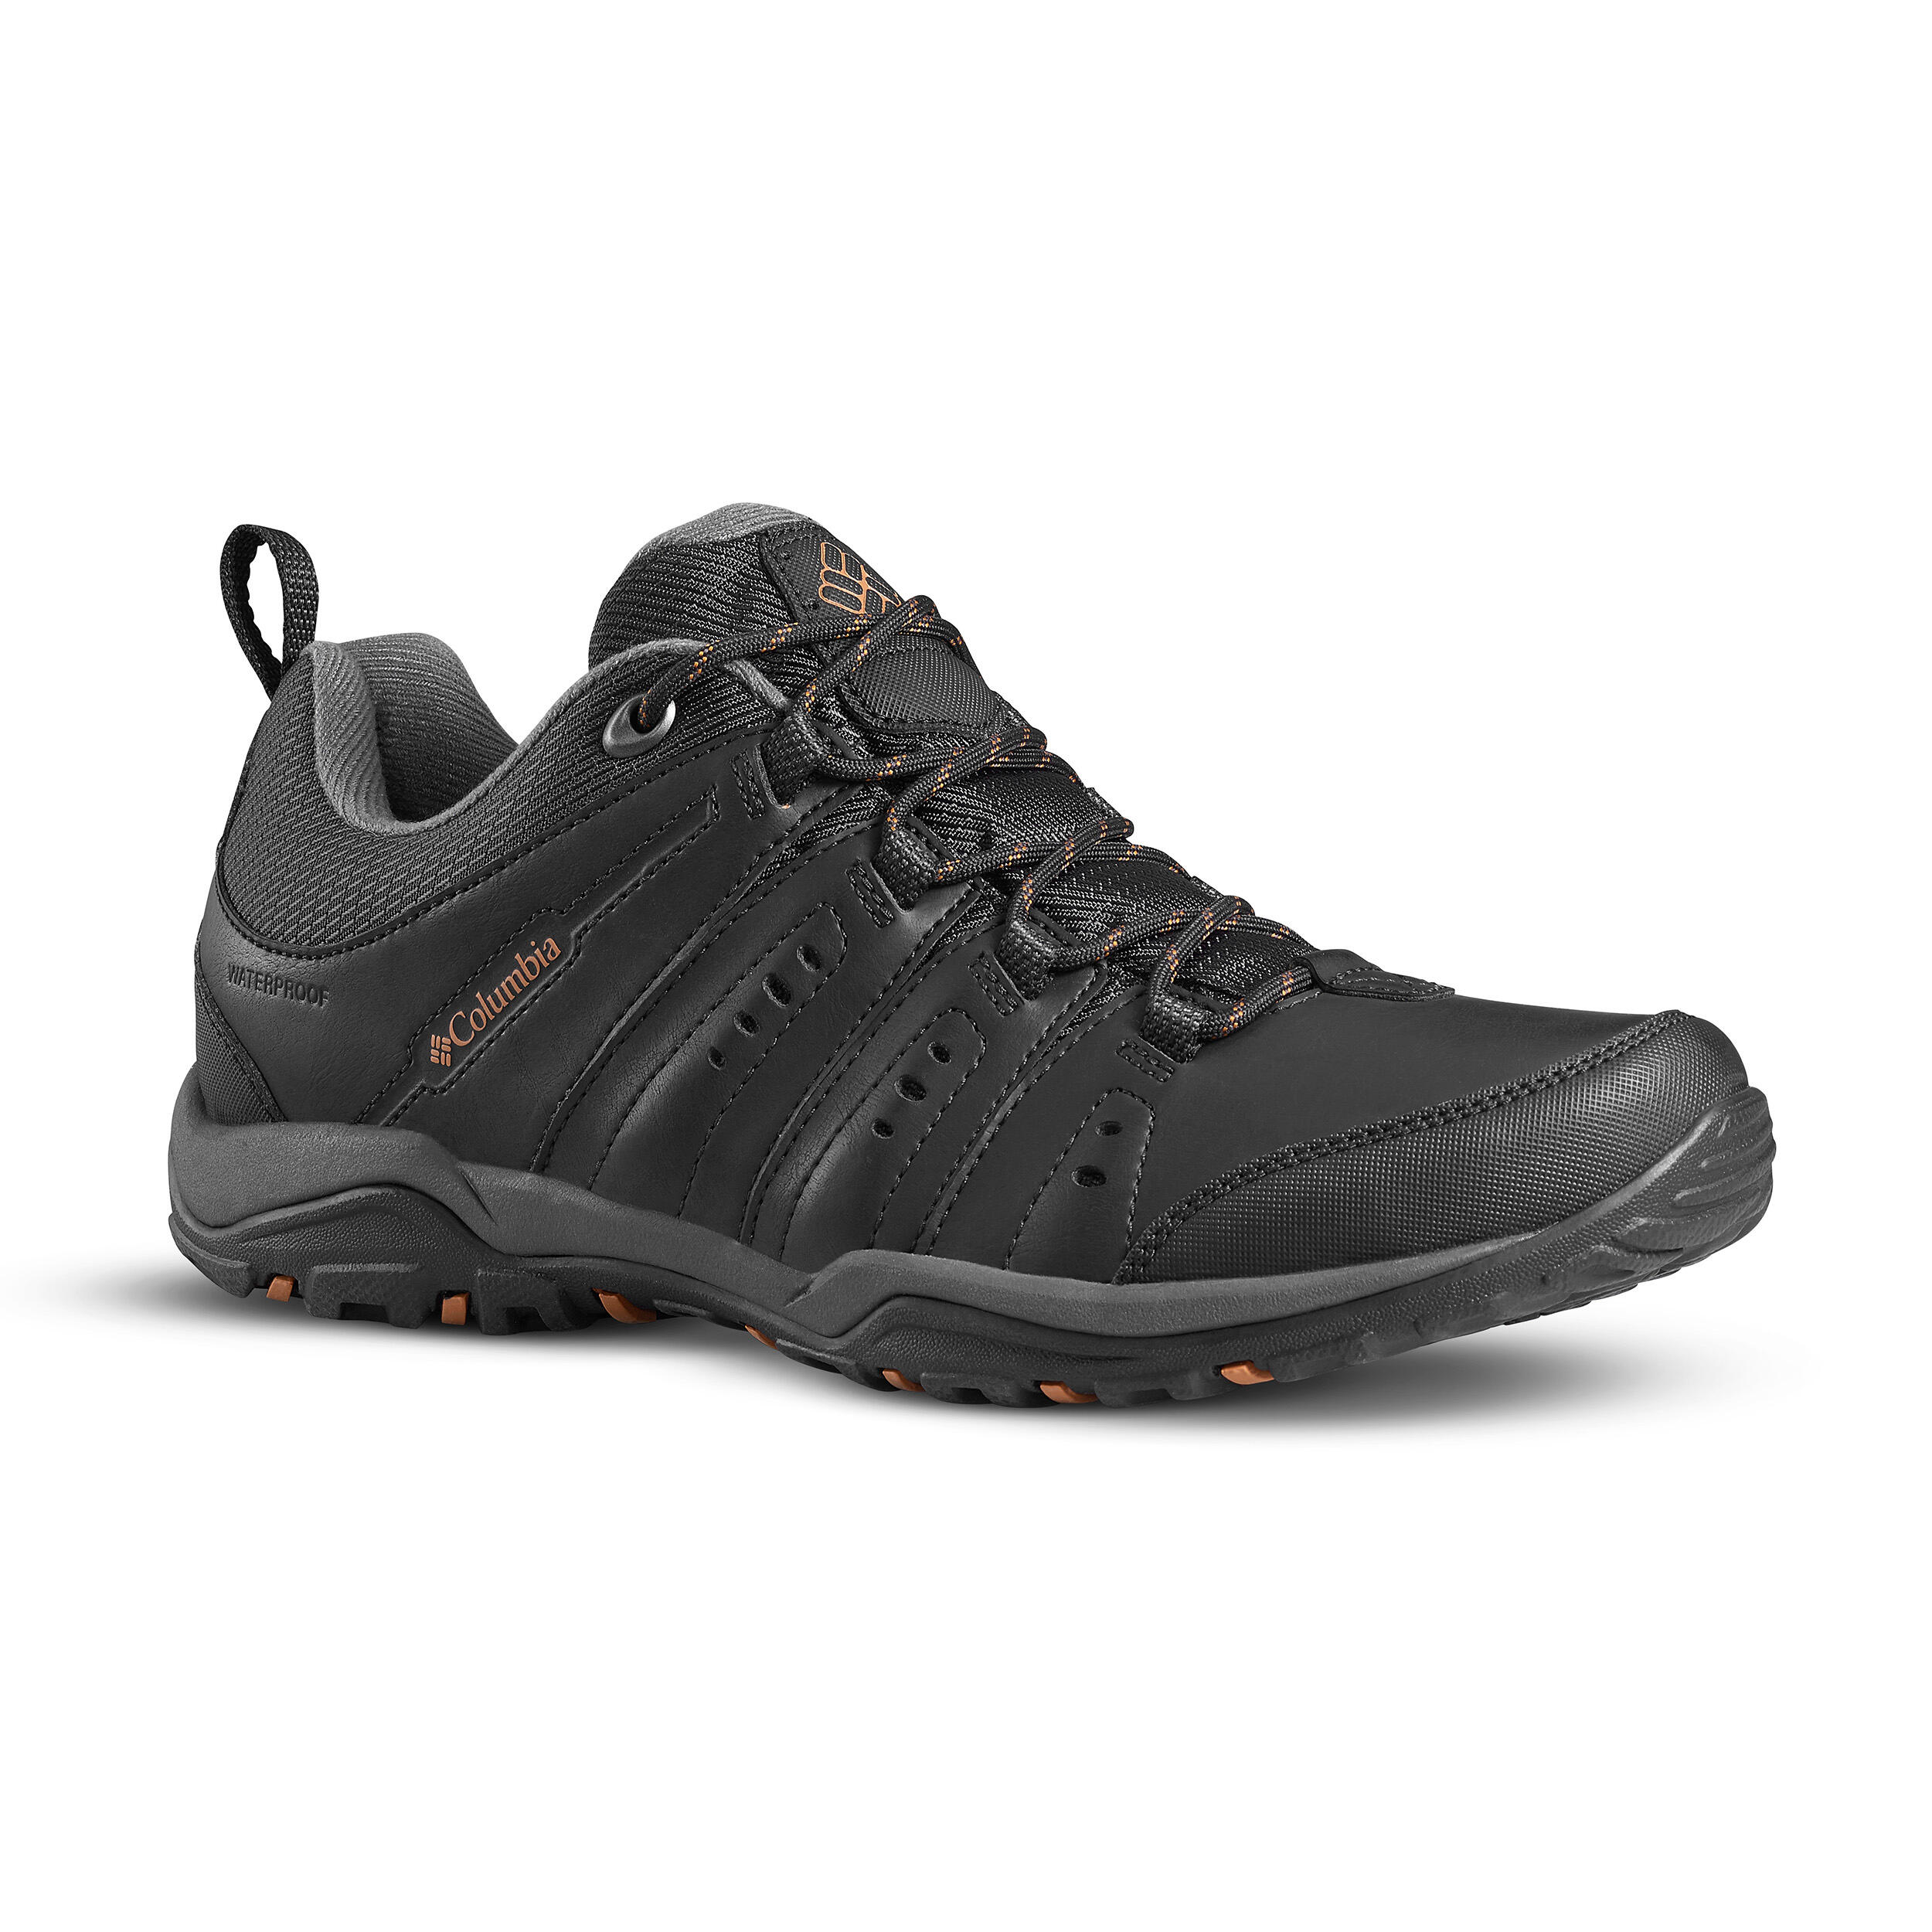 COLUMBIA Men's waterproof leather hiking boots - Columbia Fire Venture